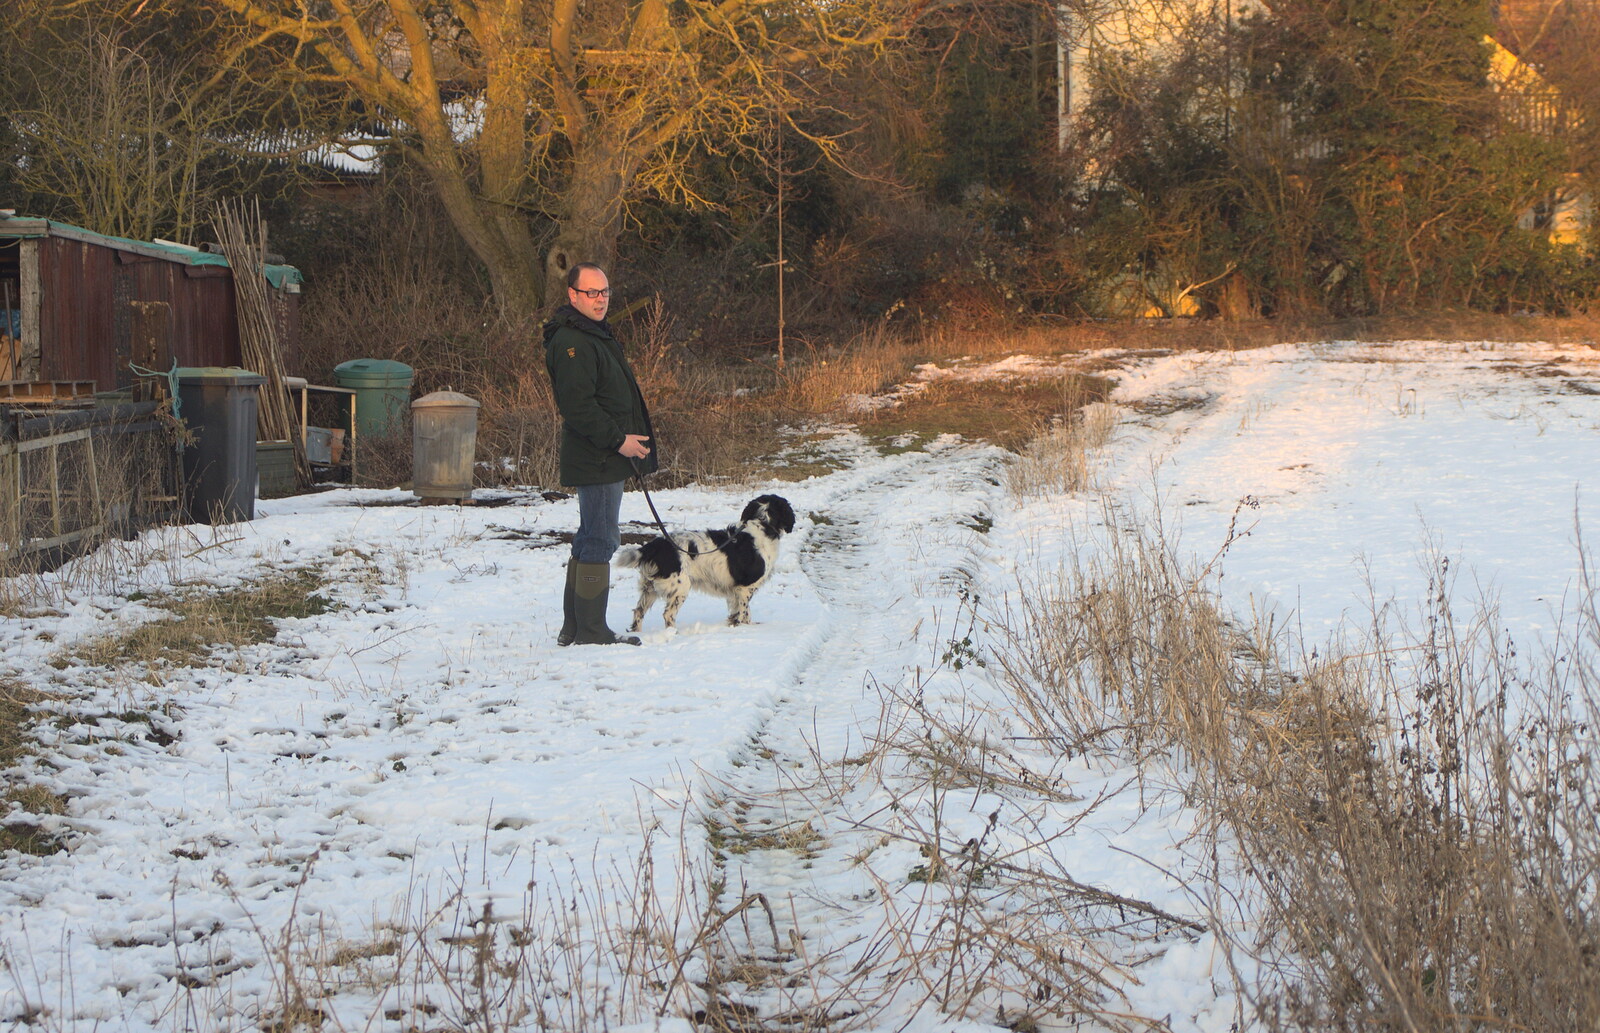 Matt with Alfie from Winter Walks with Sis and Matt, Brome and Thornham, Suffolk - 11th February 2012